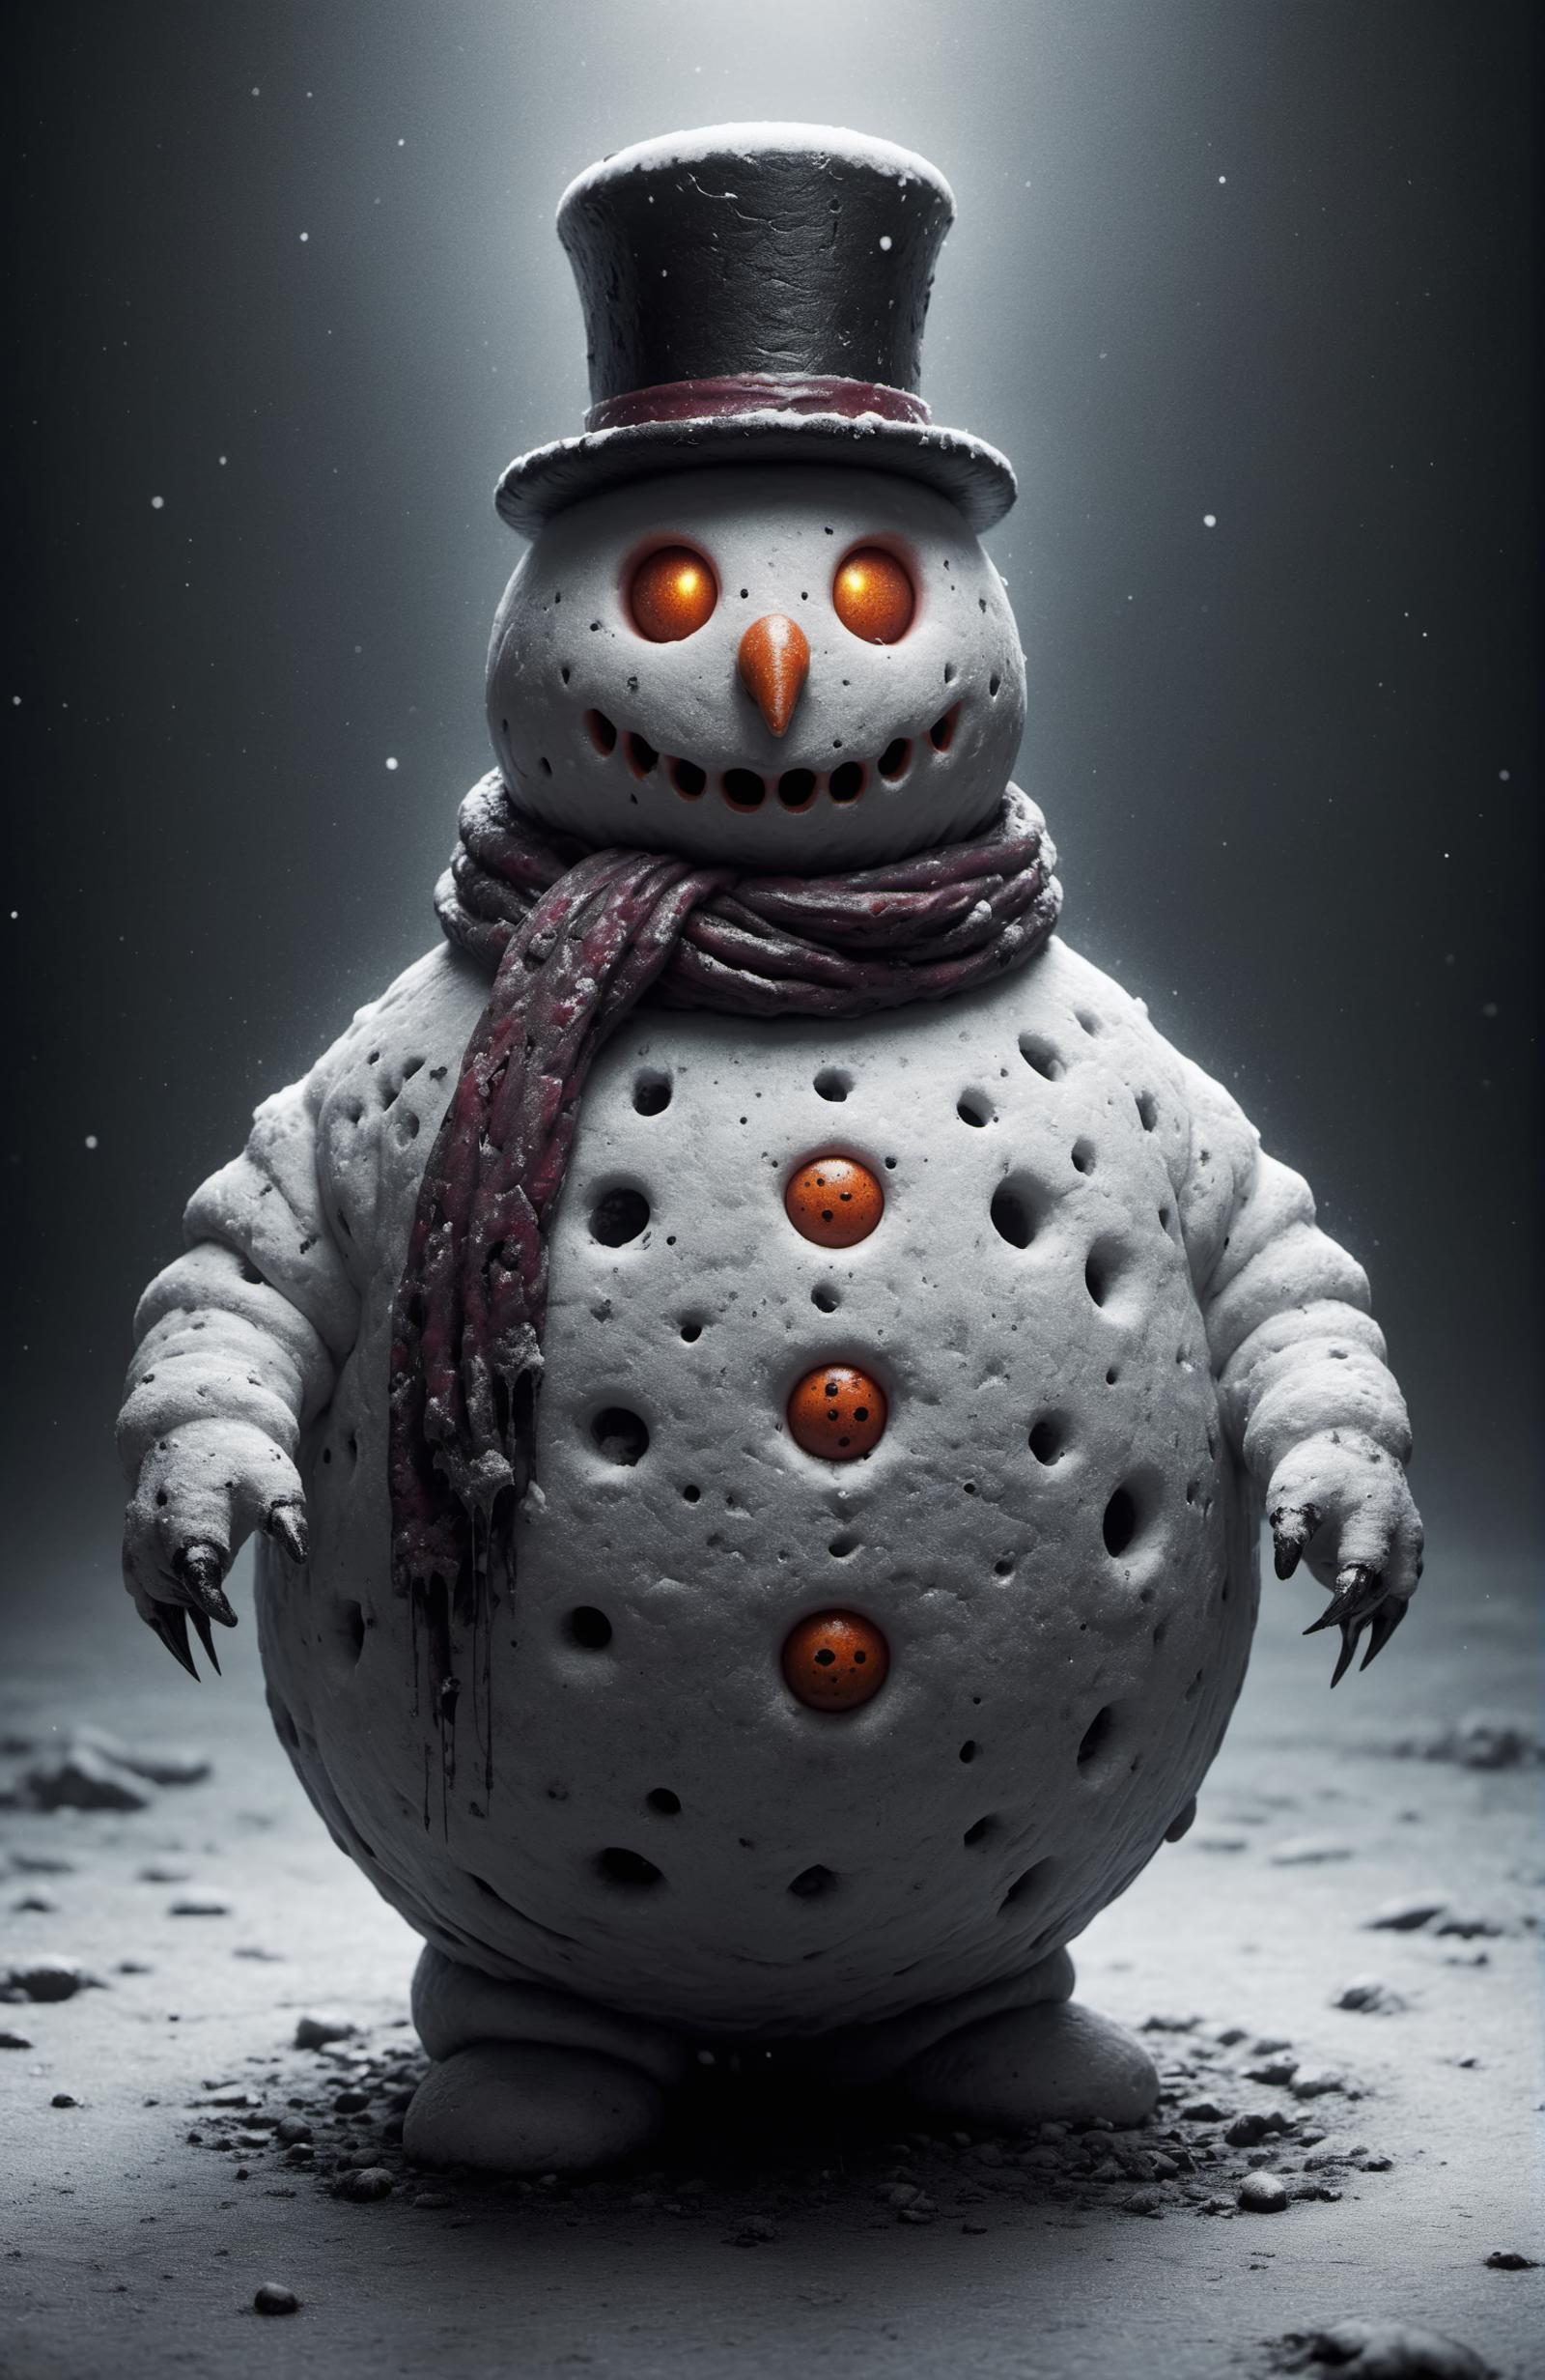 Snowman - sliders / ntcai.xyz image by TophatPandaMagician